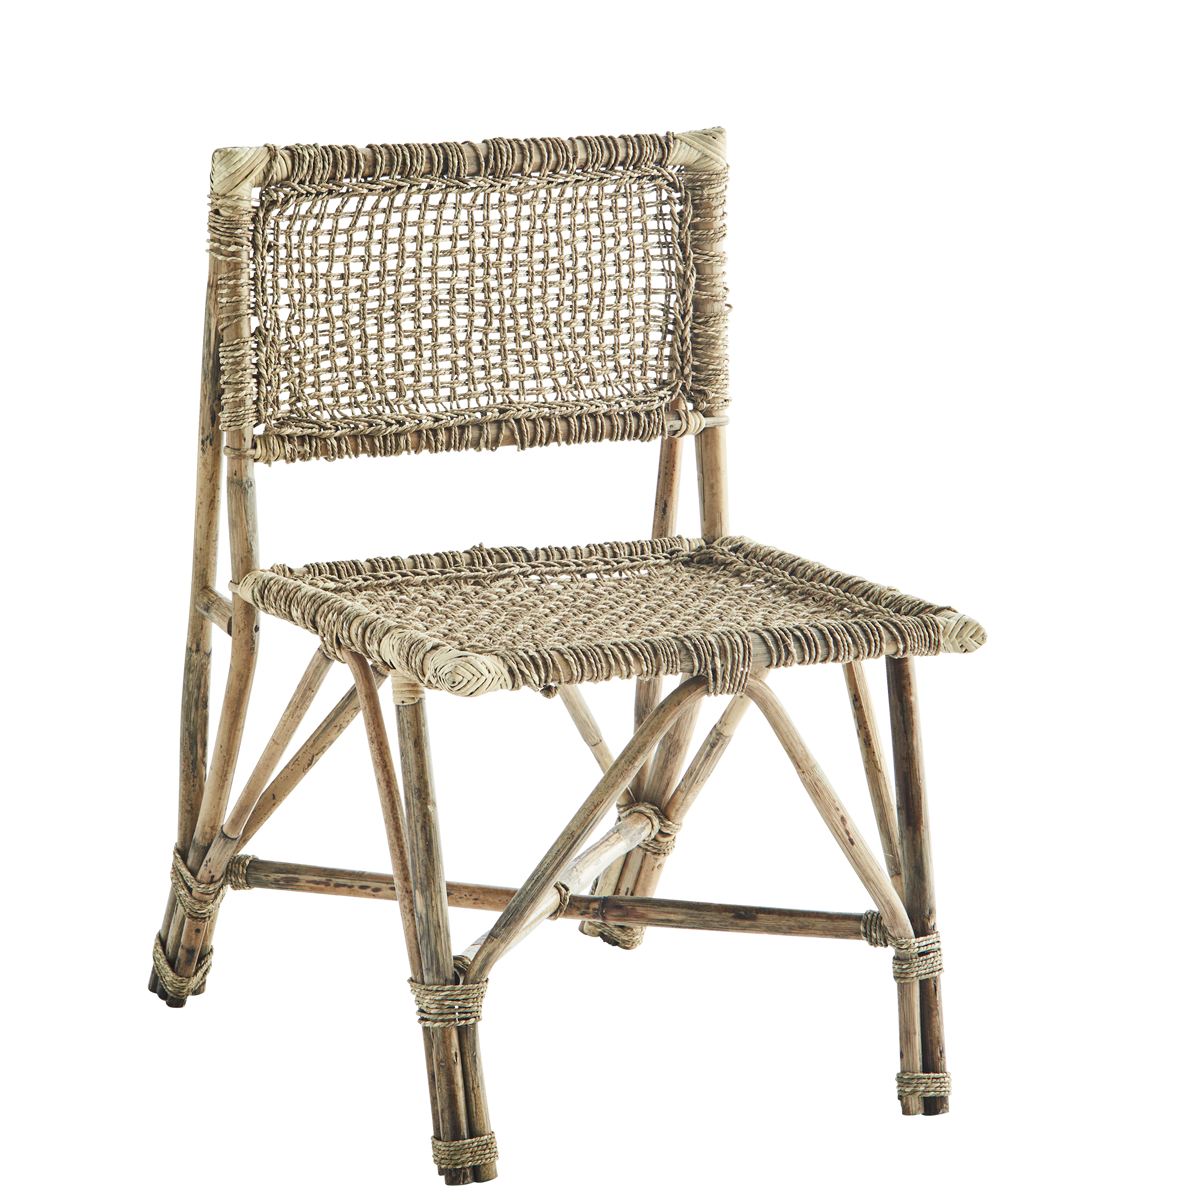 Bamboo chair w/ weaving